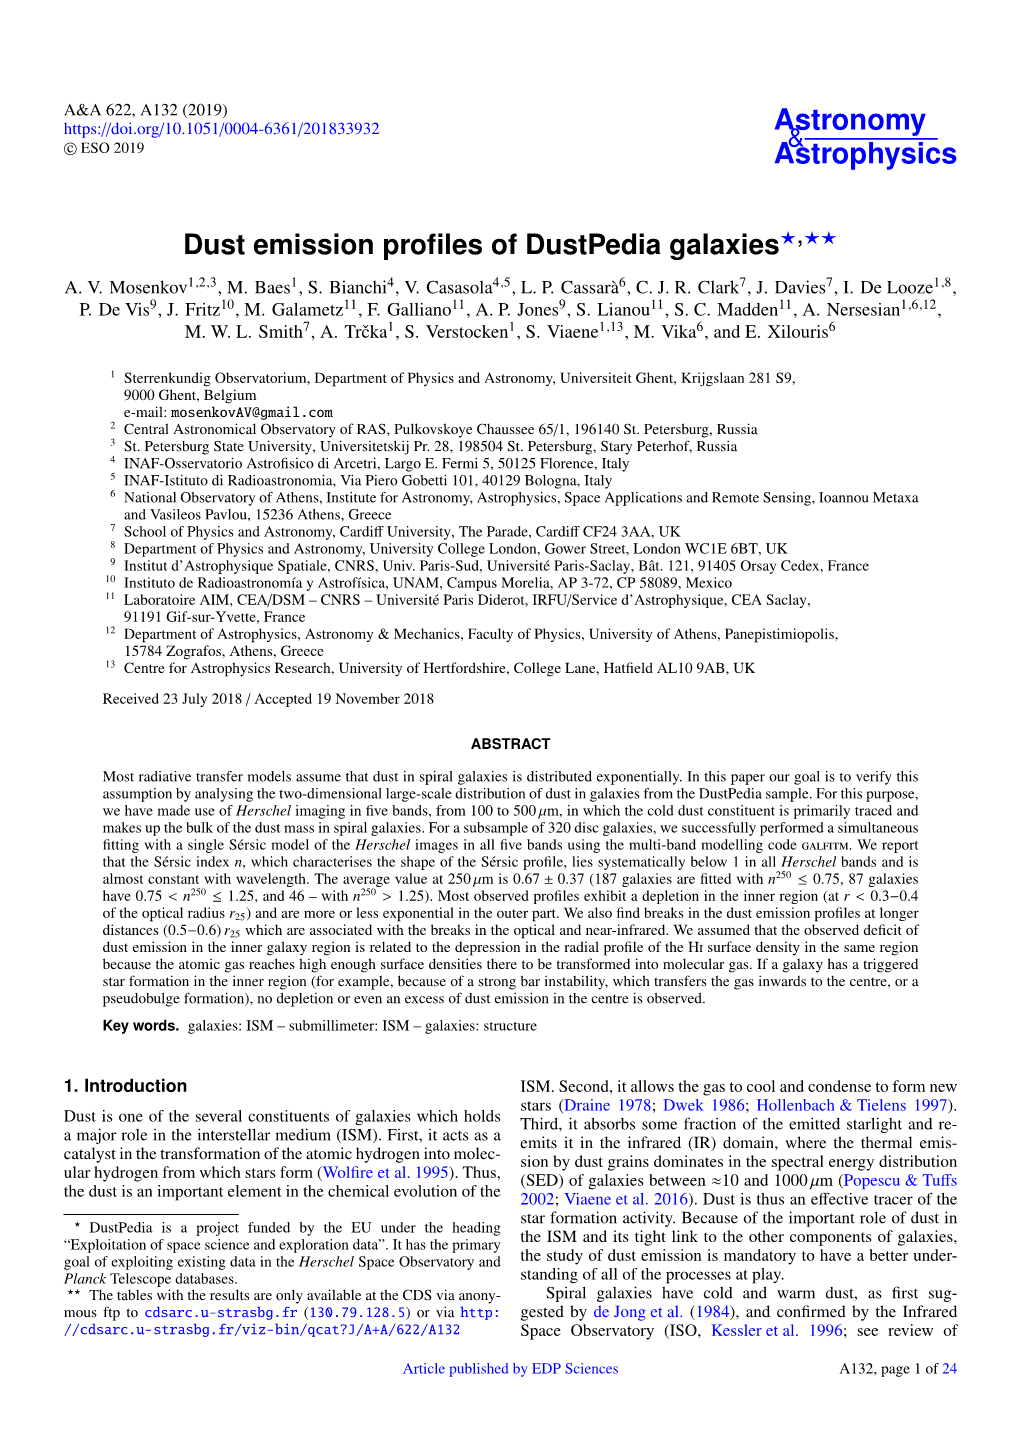 Dust Emission Profiles of Dustpedia Galaxies